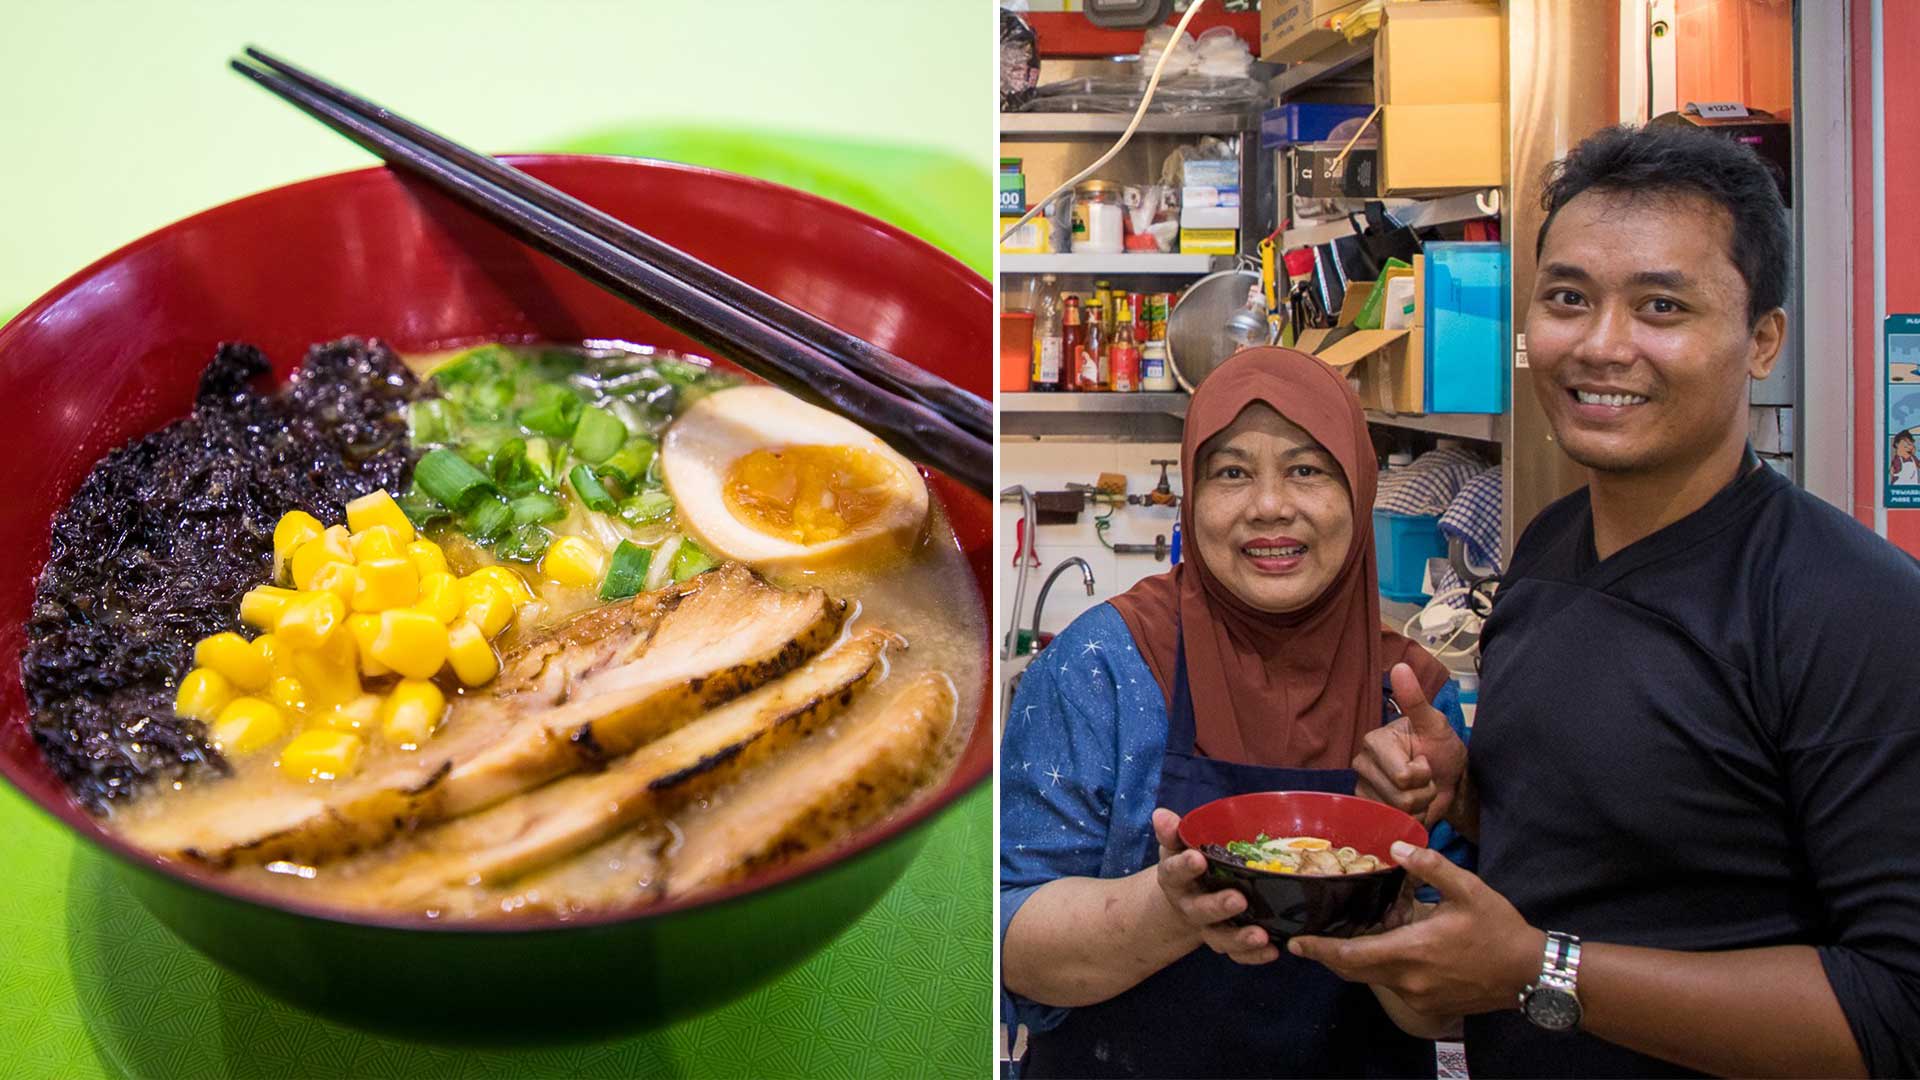 Finance Grad-Turned-Hawker Sells $6.90 Halal Ramen At Tanjong Pagar With Mum